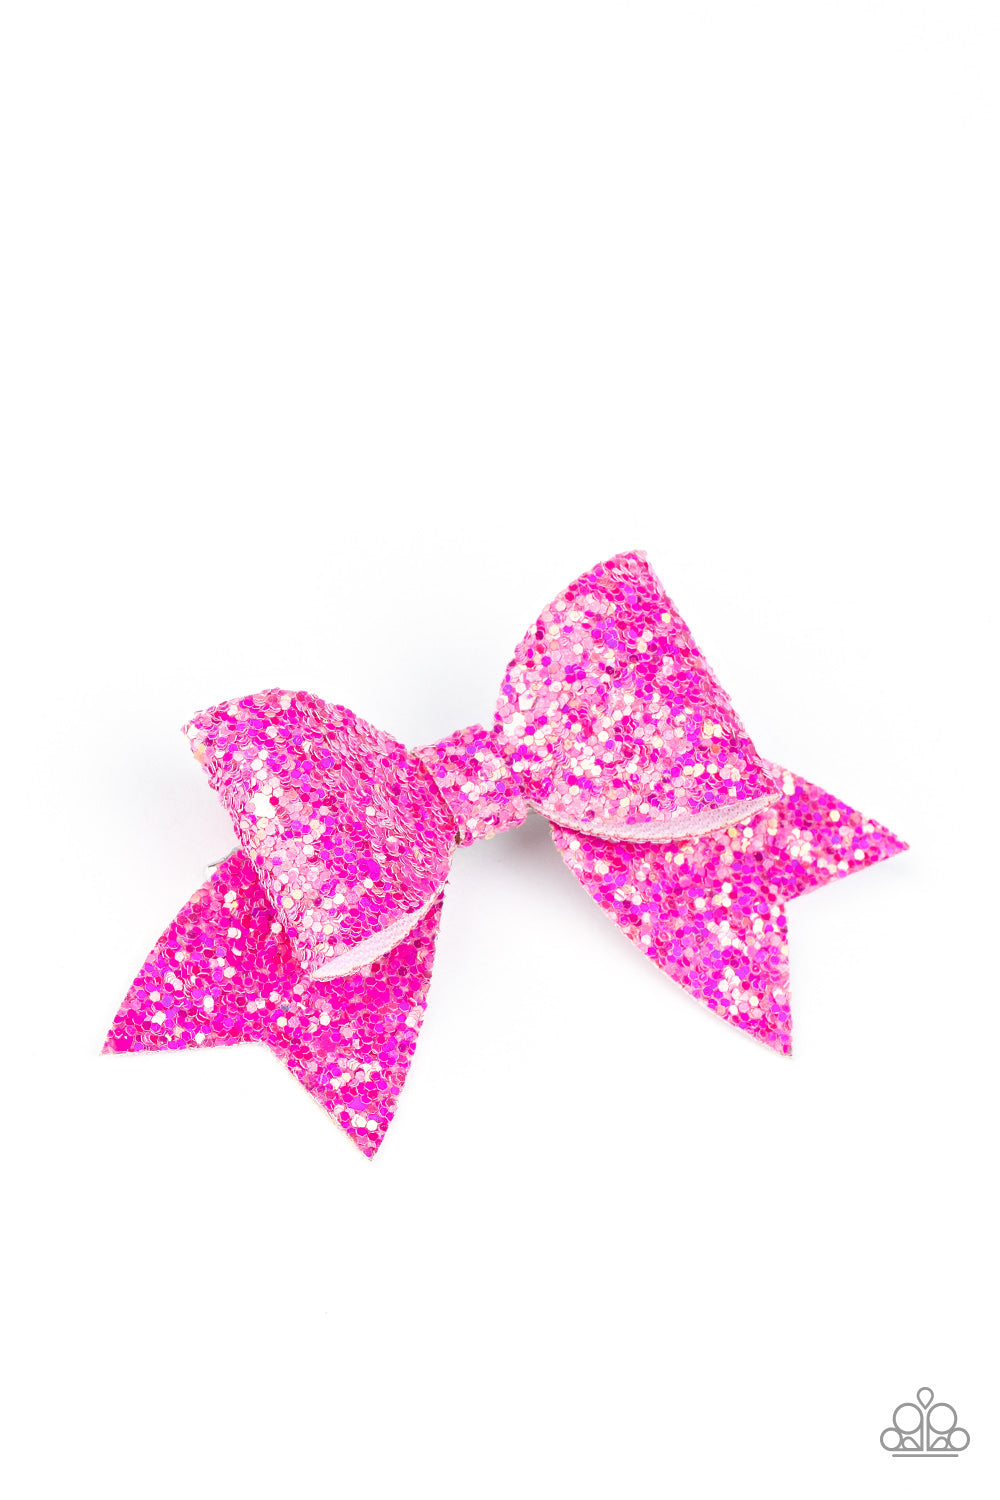 confetti-princess-pink-p7ss-pkxx-144xx